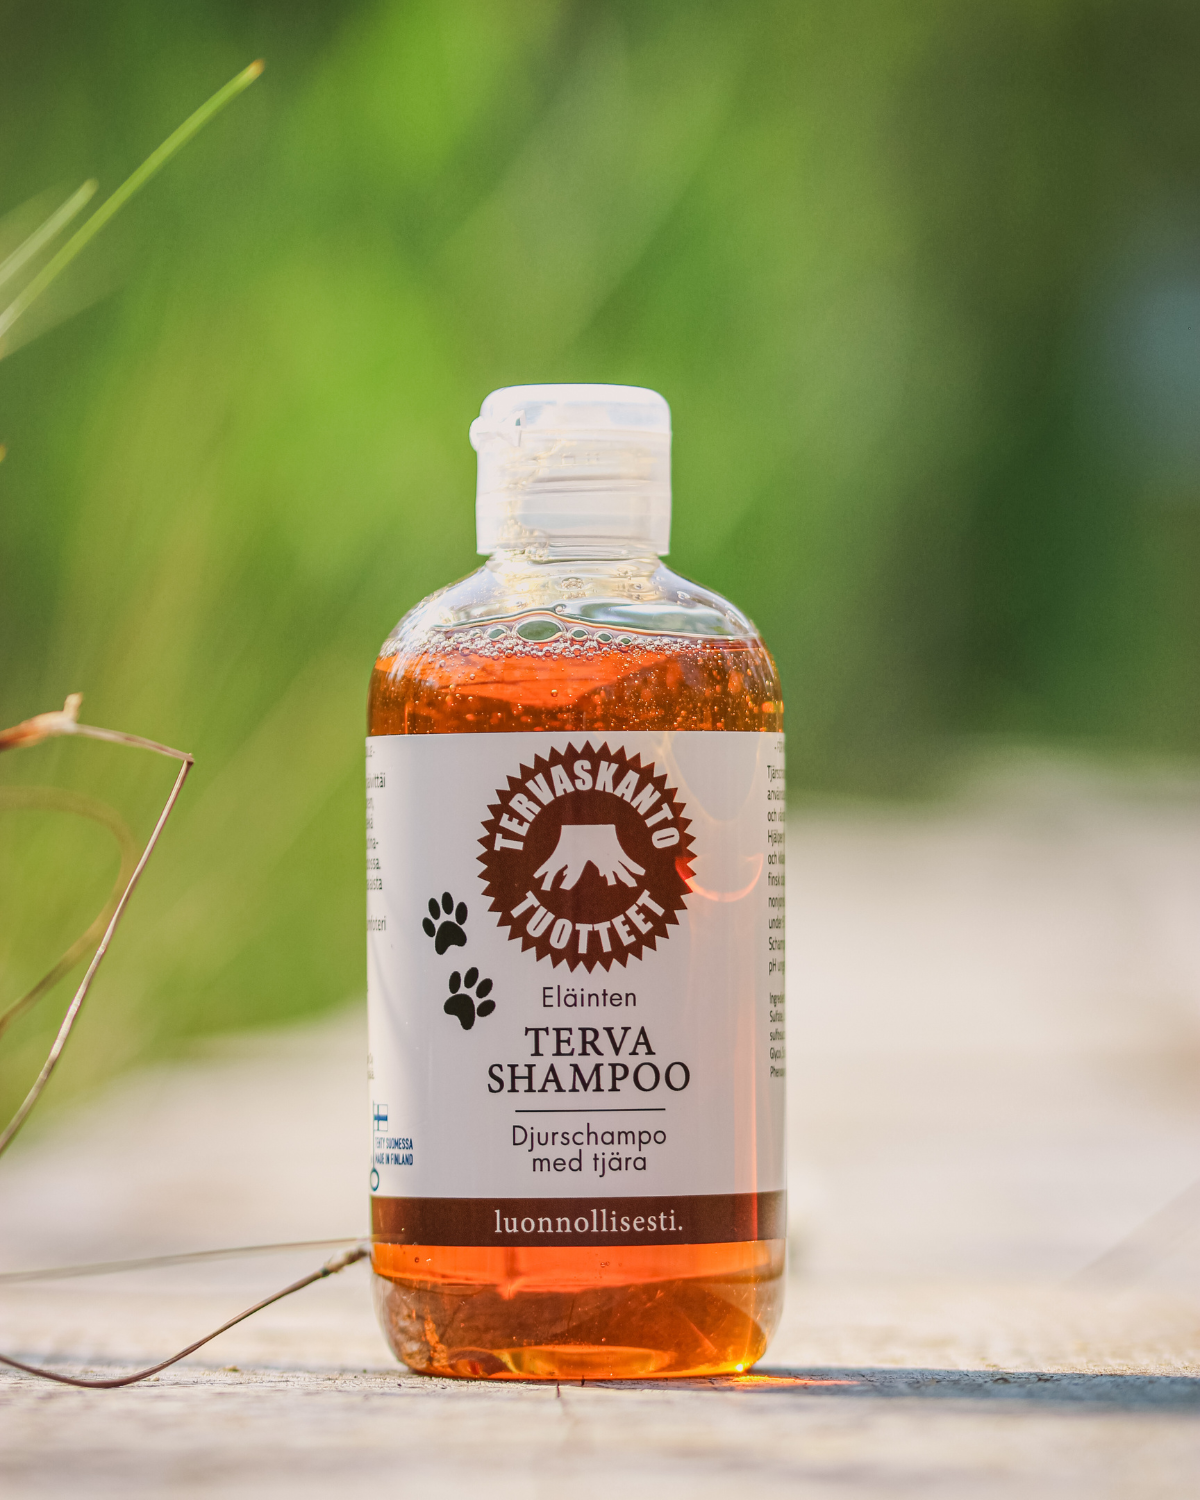 Tar shampoo for animals